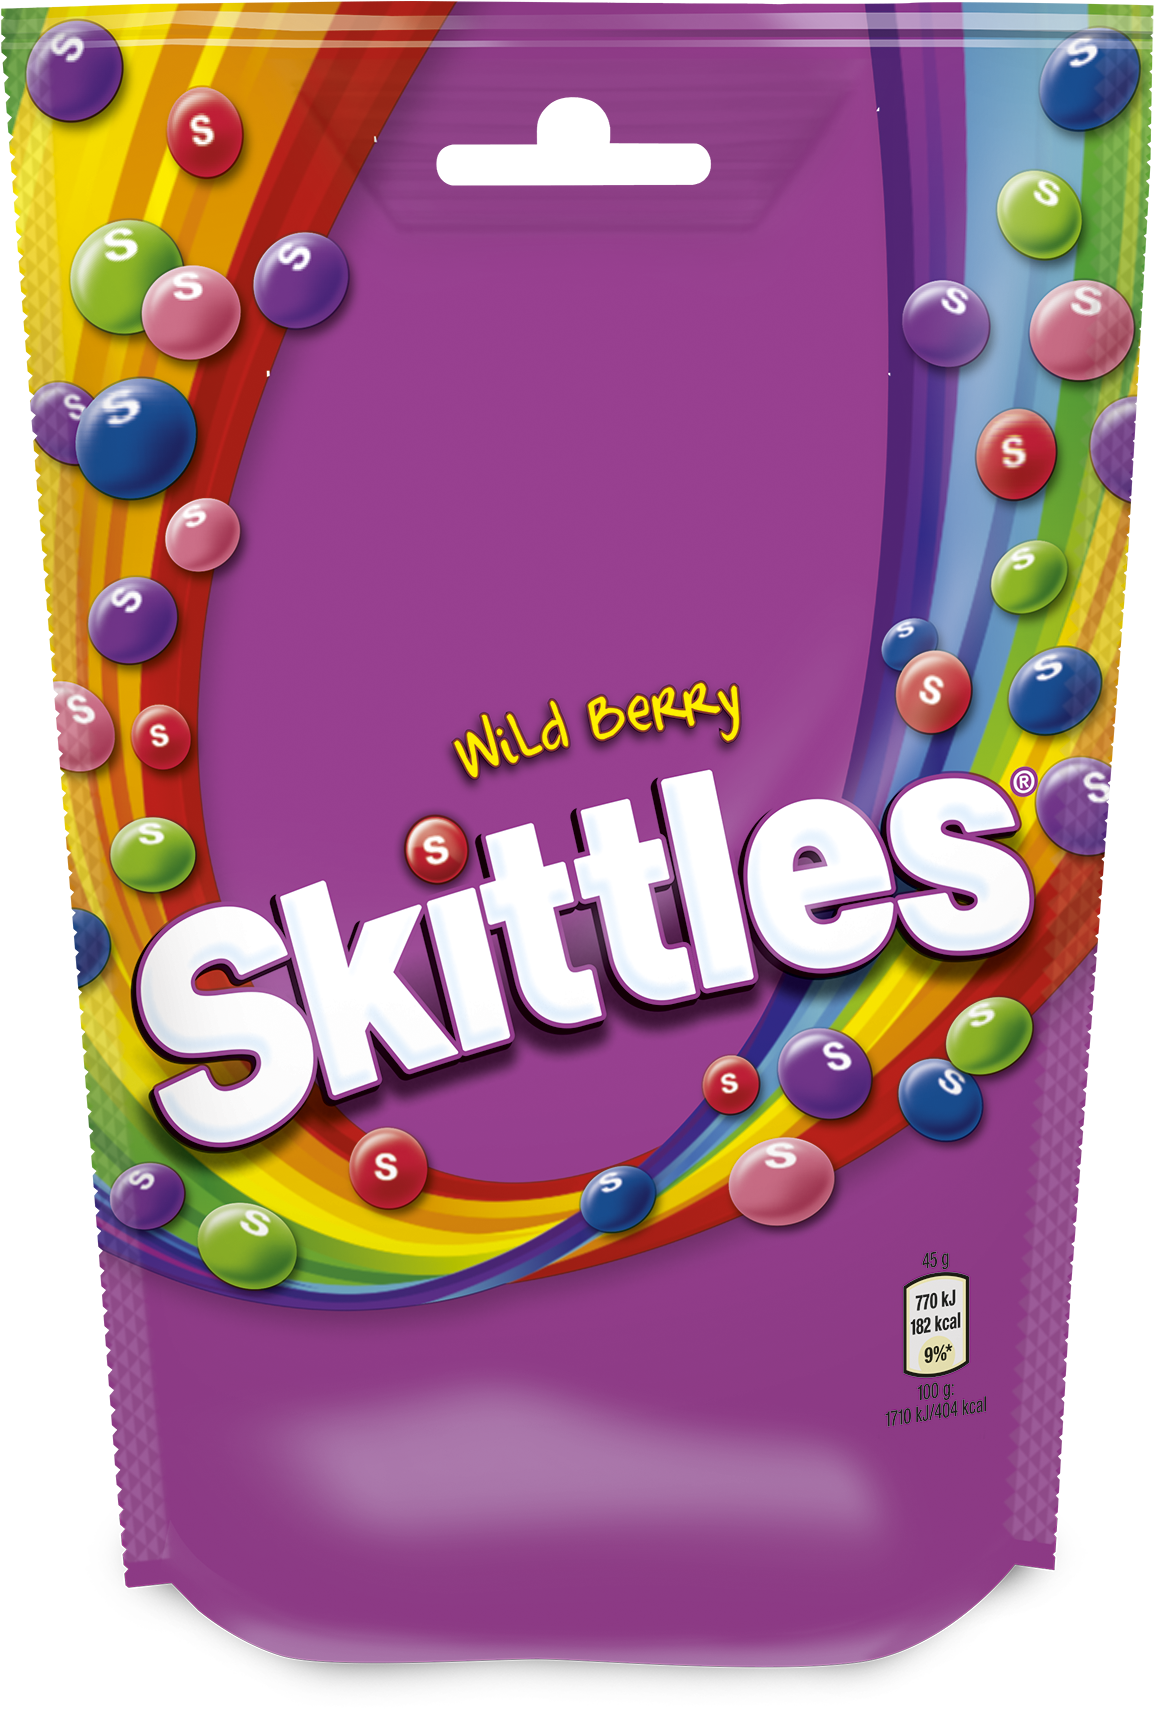 Ean - - Skittles Wild Berry 174g (1359x1949)